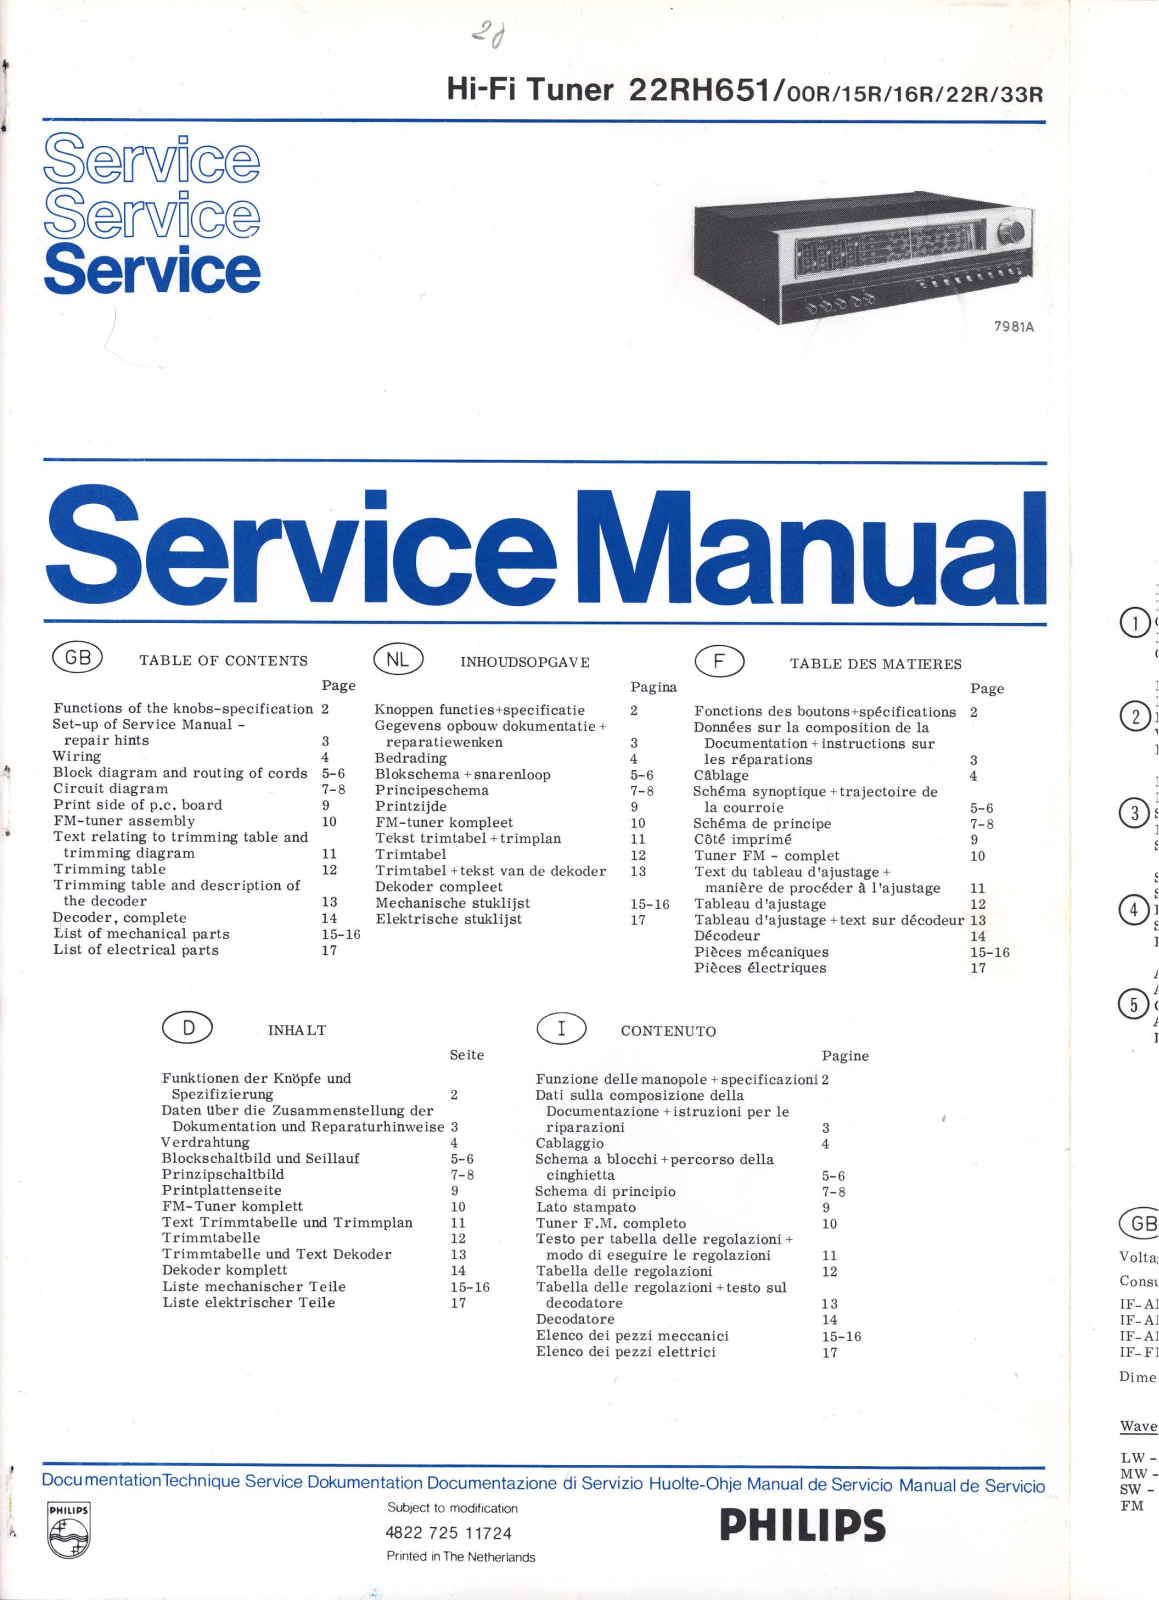 Philips 22-RH-651 Service Manual